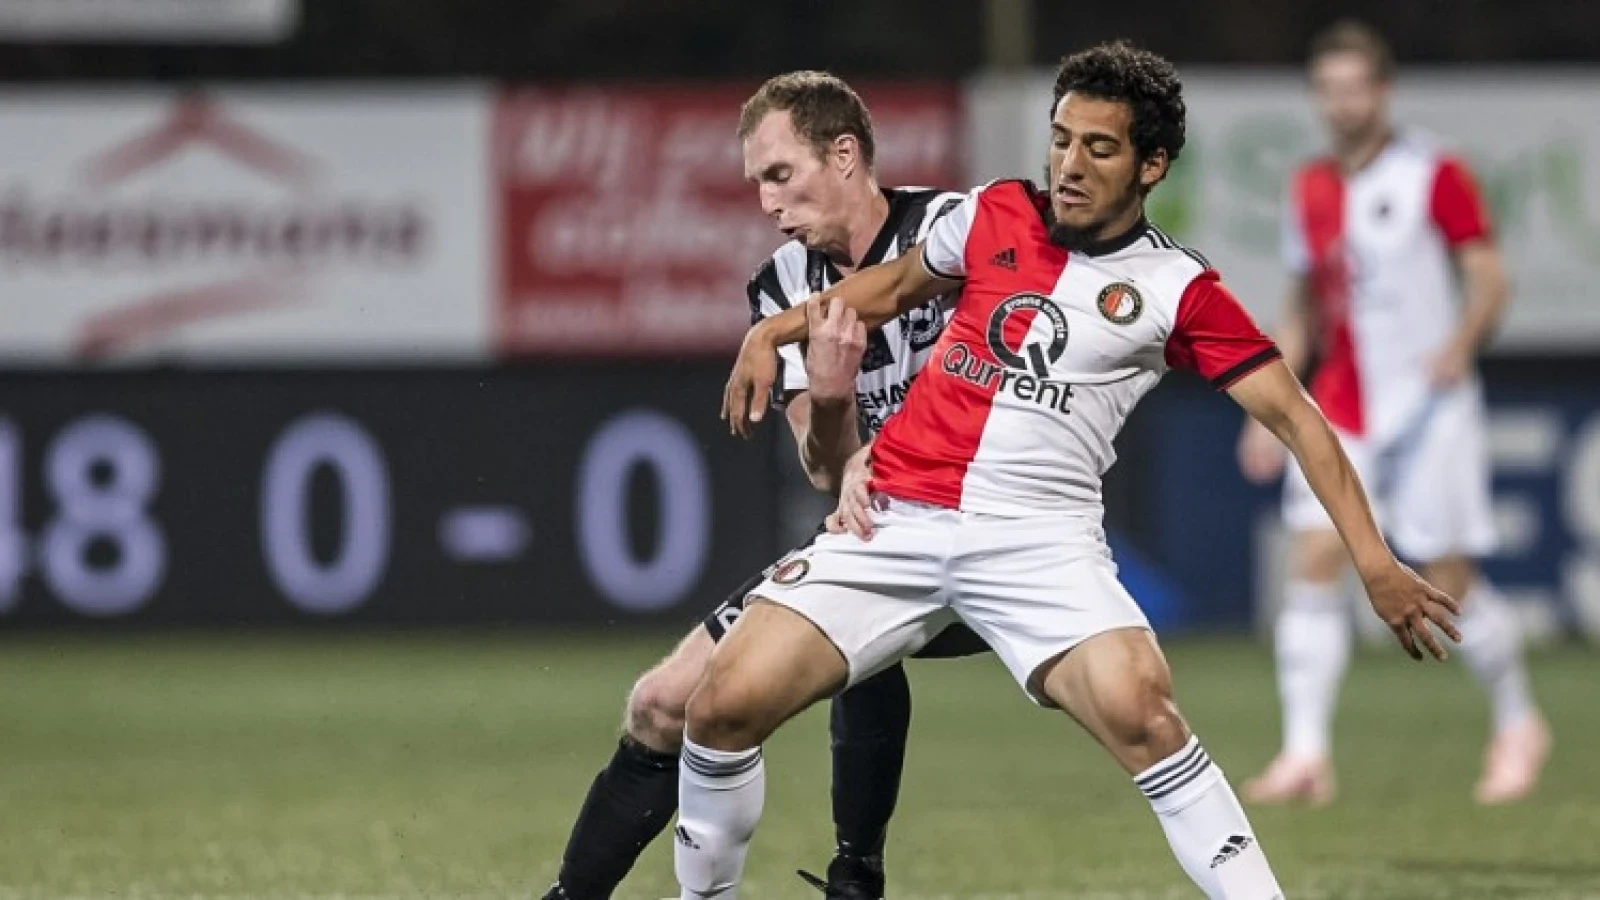 LIVE | VV Gemert - Feyenoord 0-4 | Einde wedstrijd